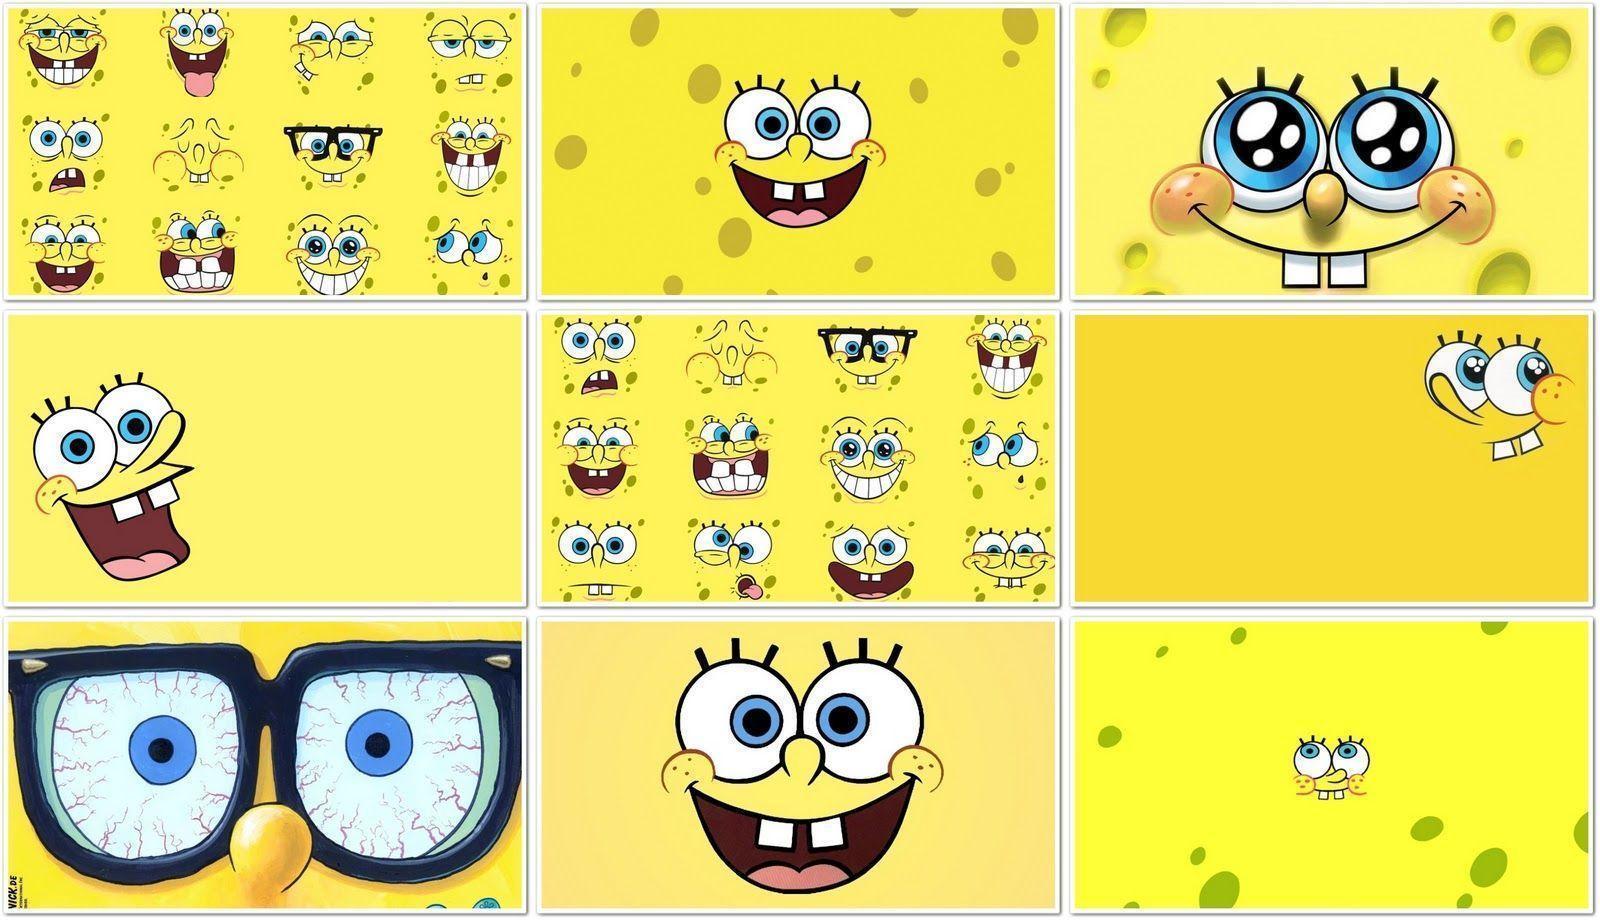 Anime, Cartons & Animations: Fascinating Spongebob Squarepants